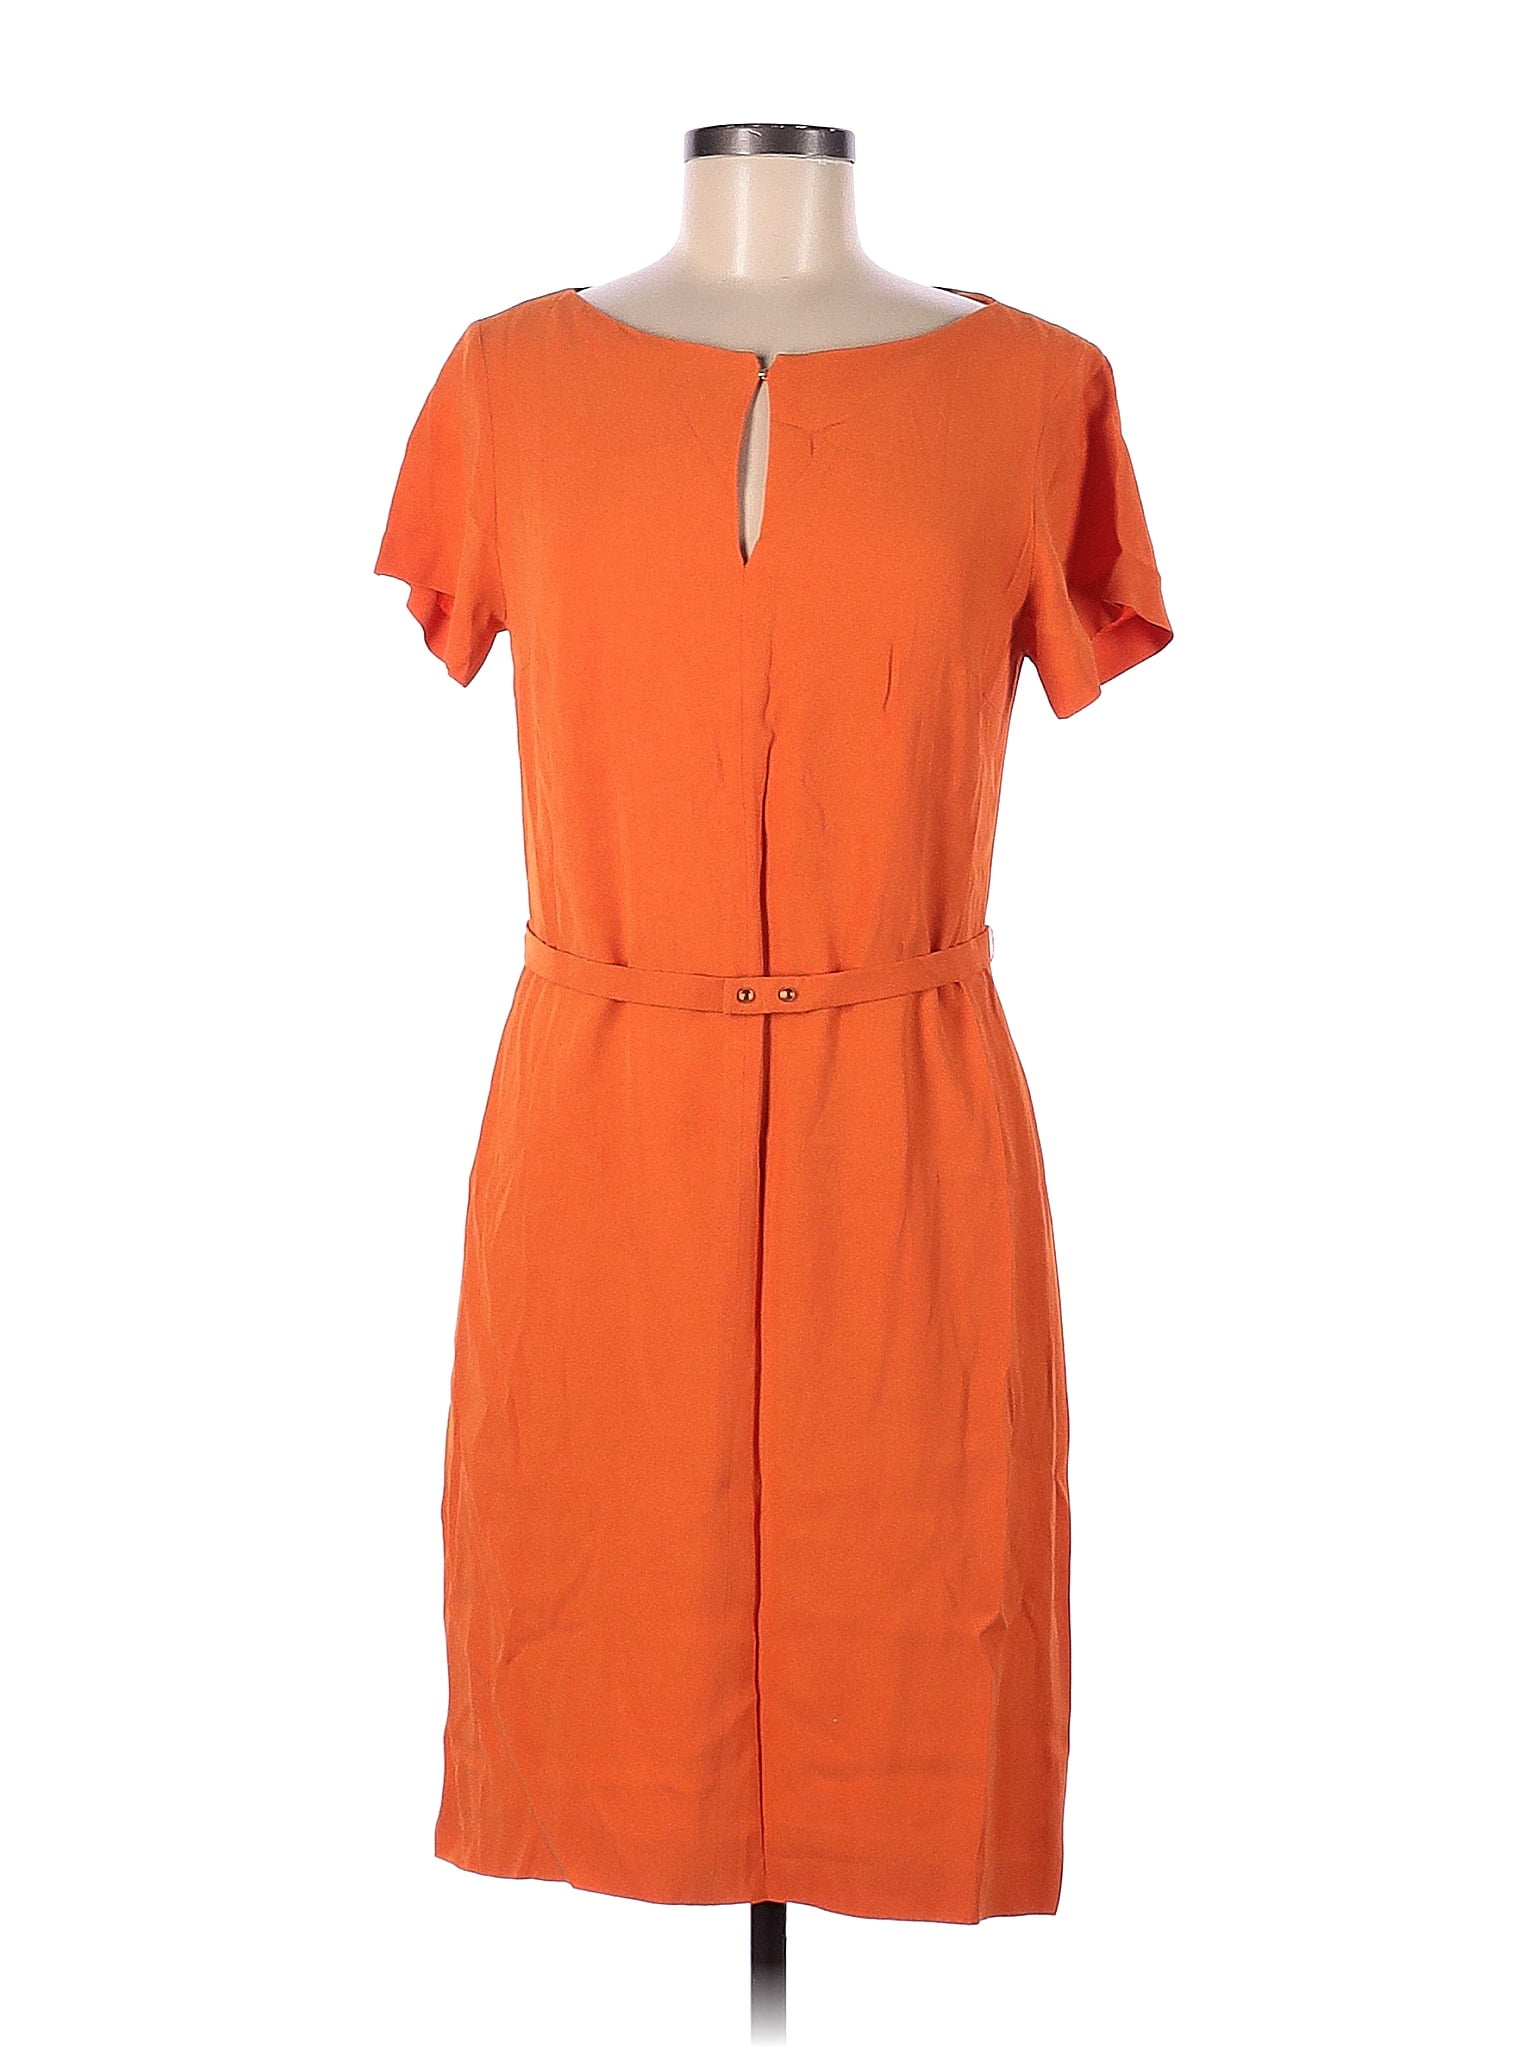 J. Jill Orange Knee-Length Dresses